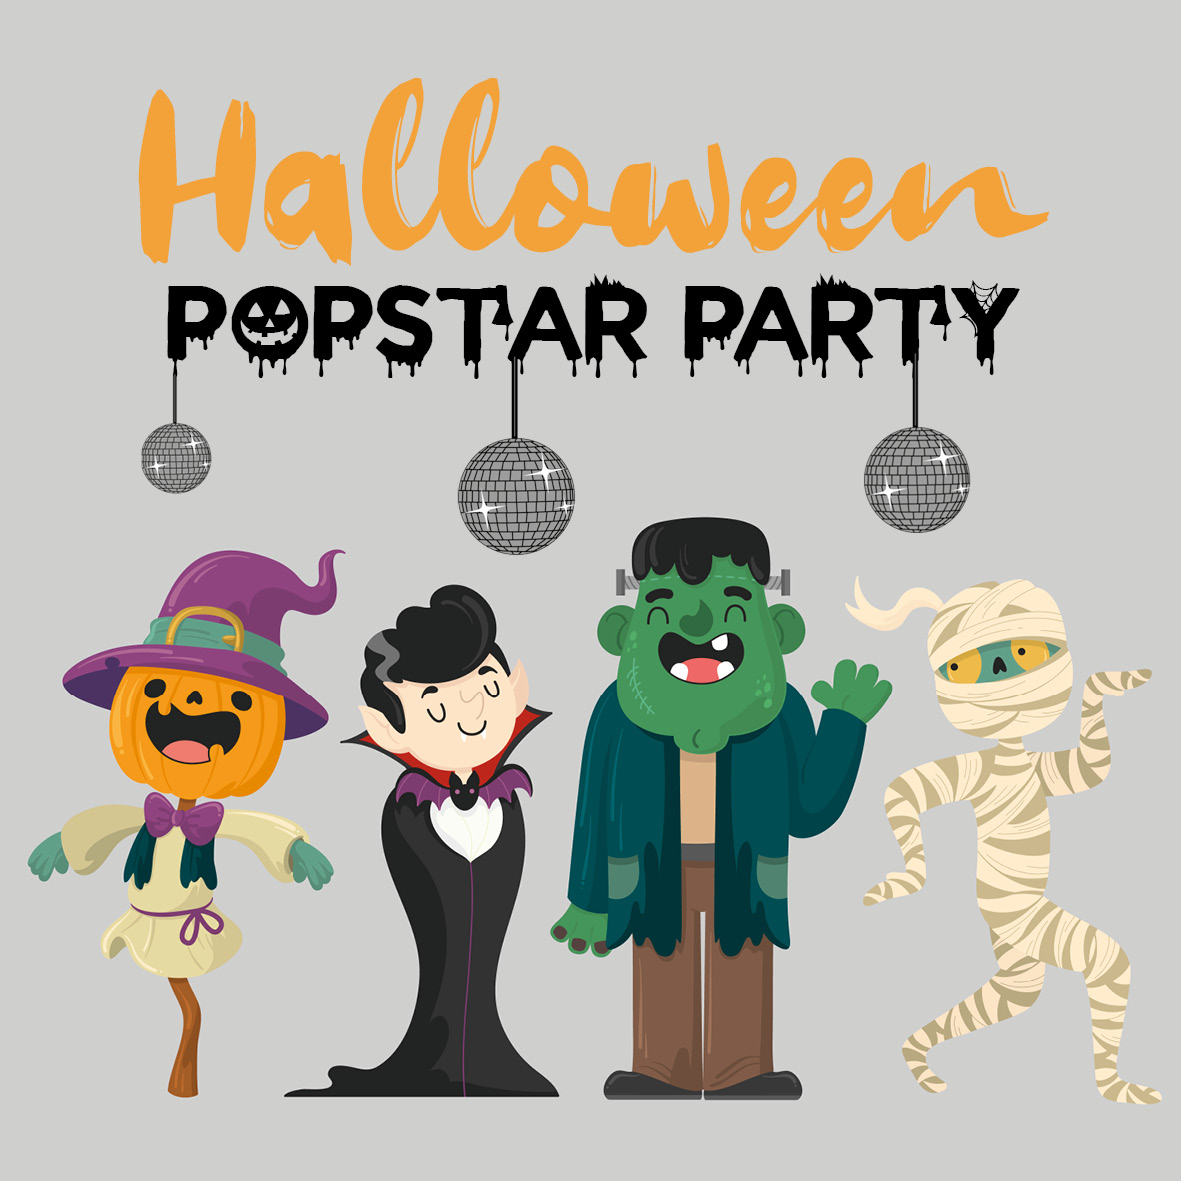 HALLOWEEN POPSTAR PARTY